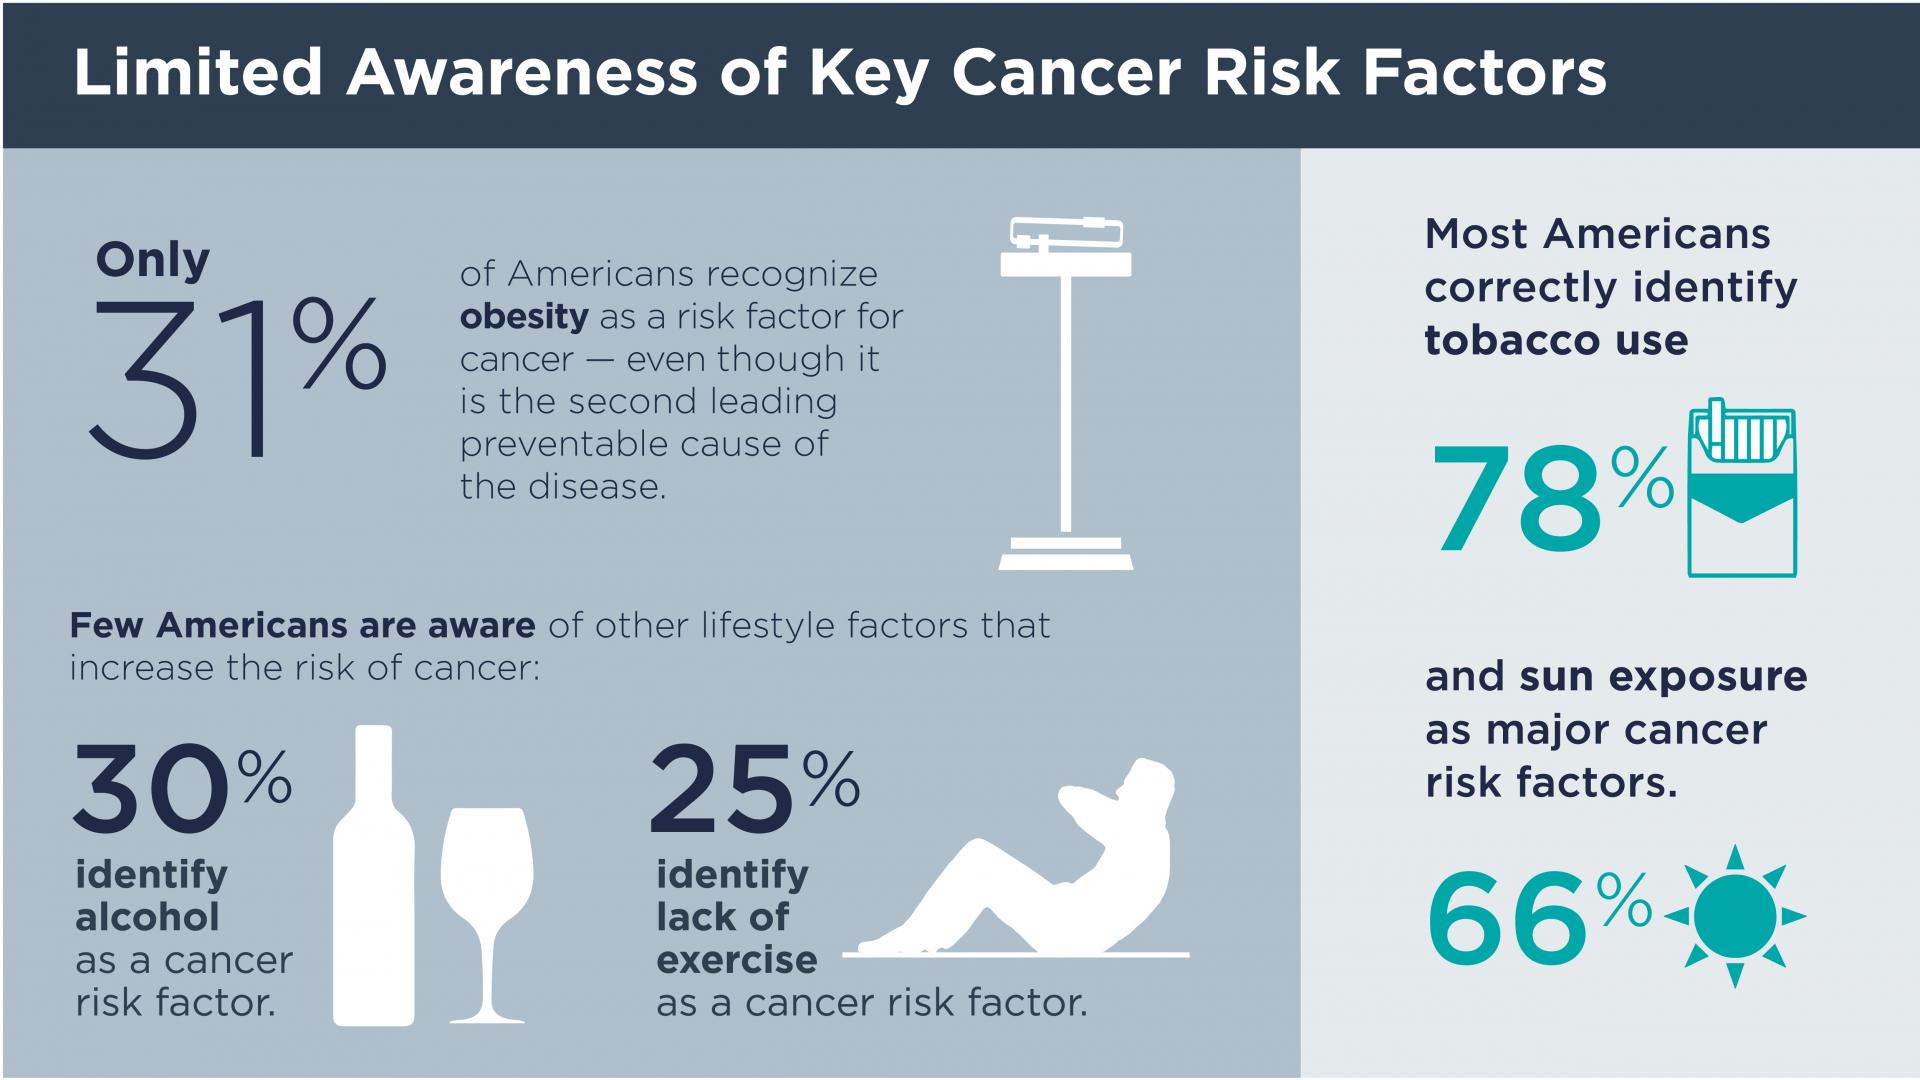 Limited Awareness of Key Cancer Risk Factors